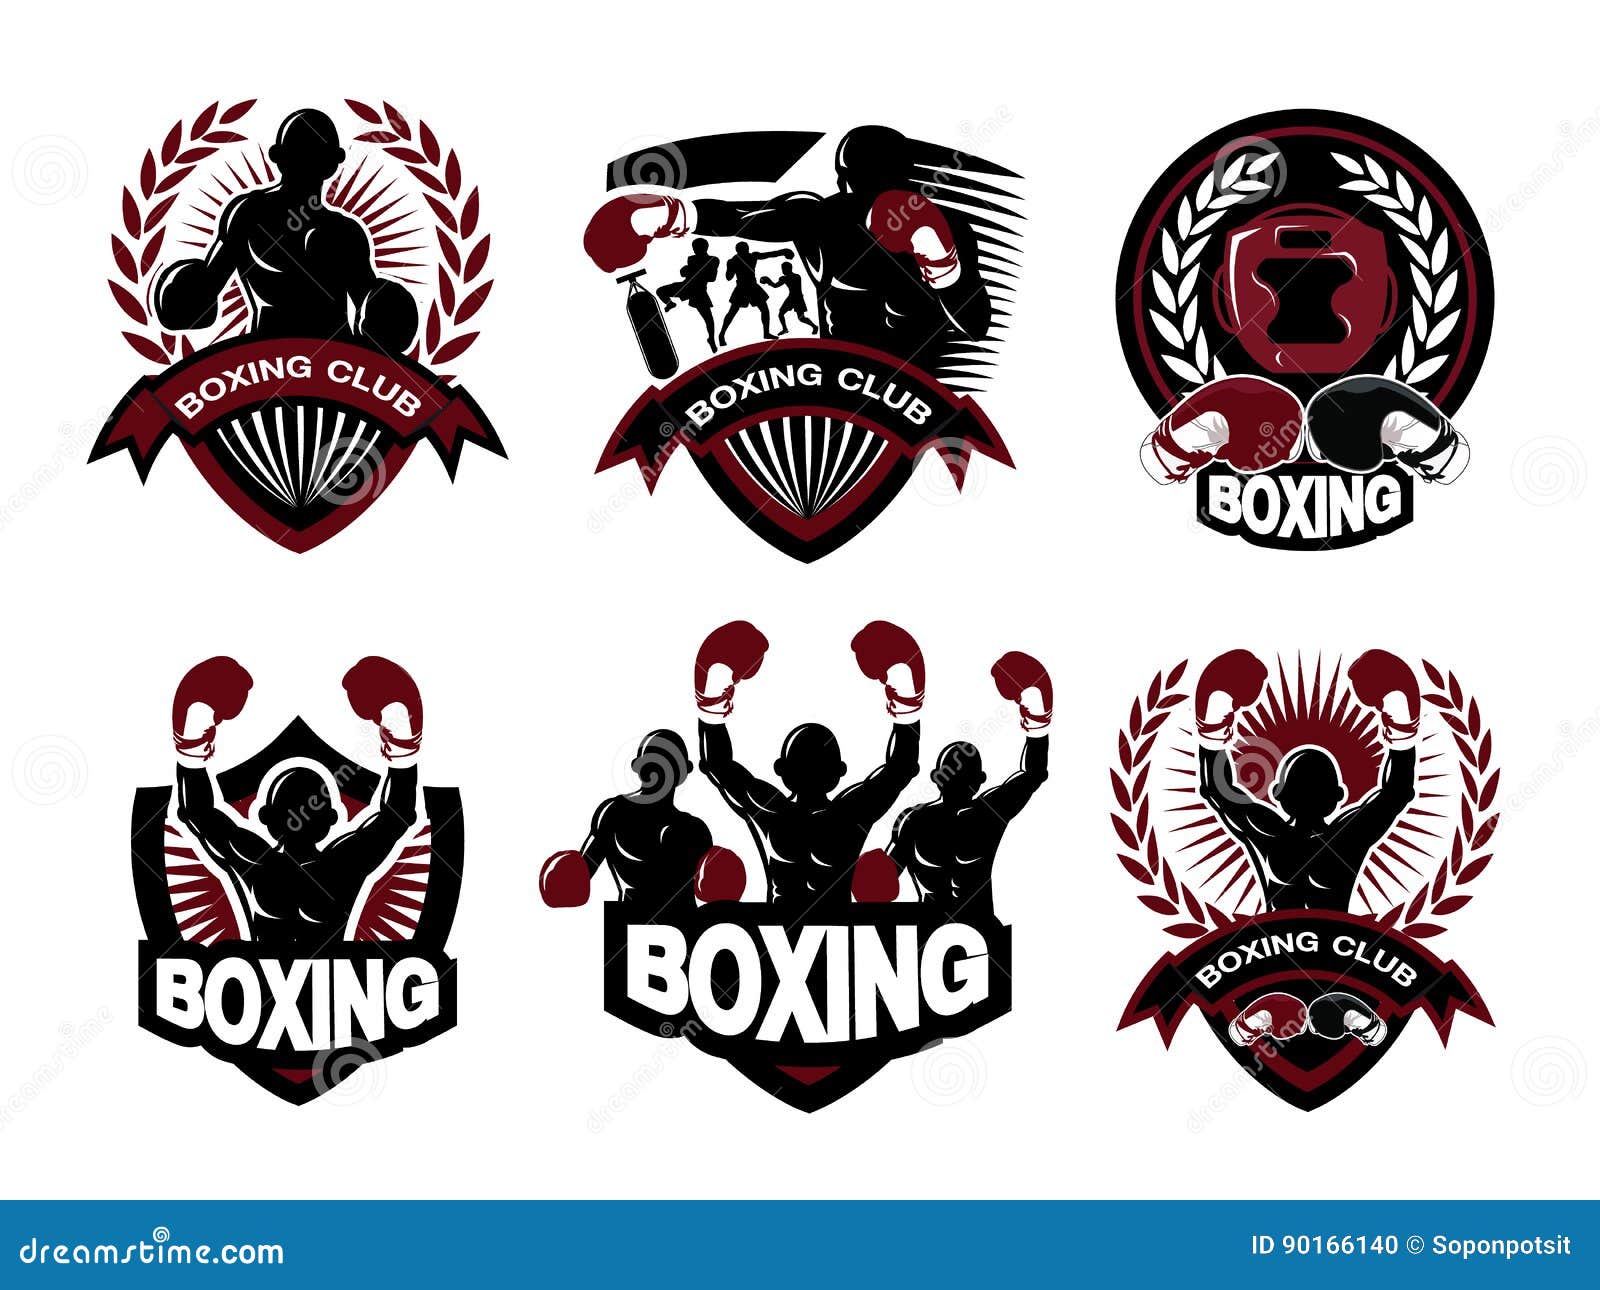 boxing logo ideas 3